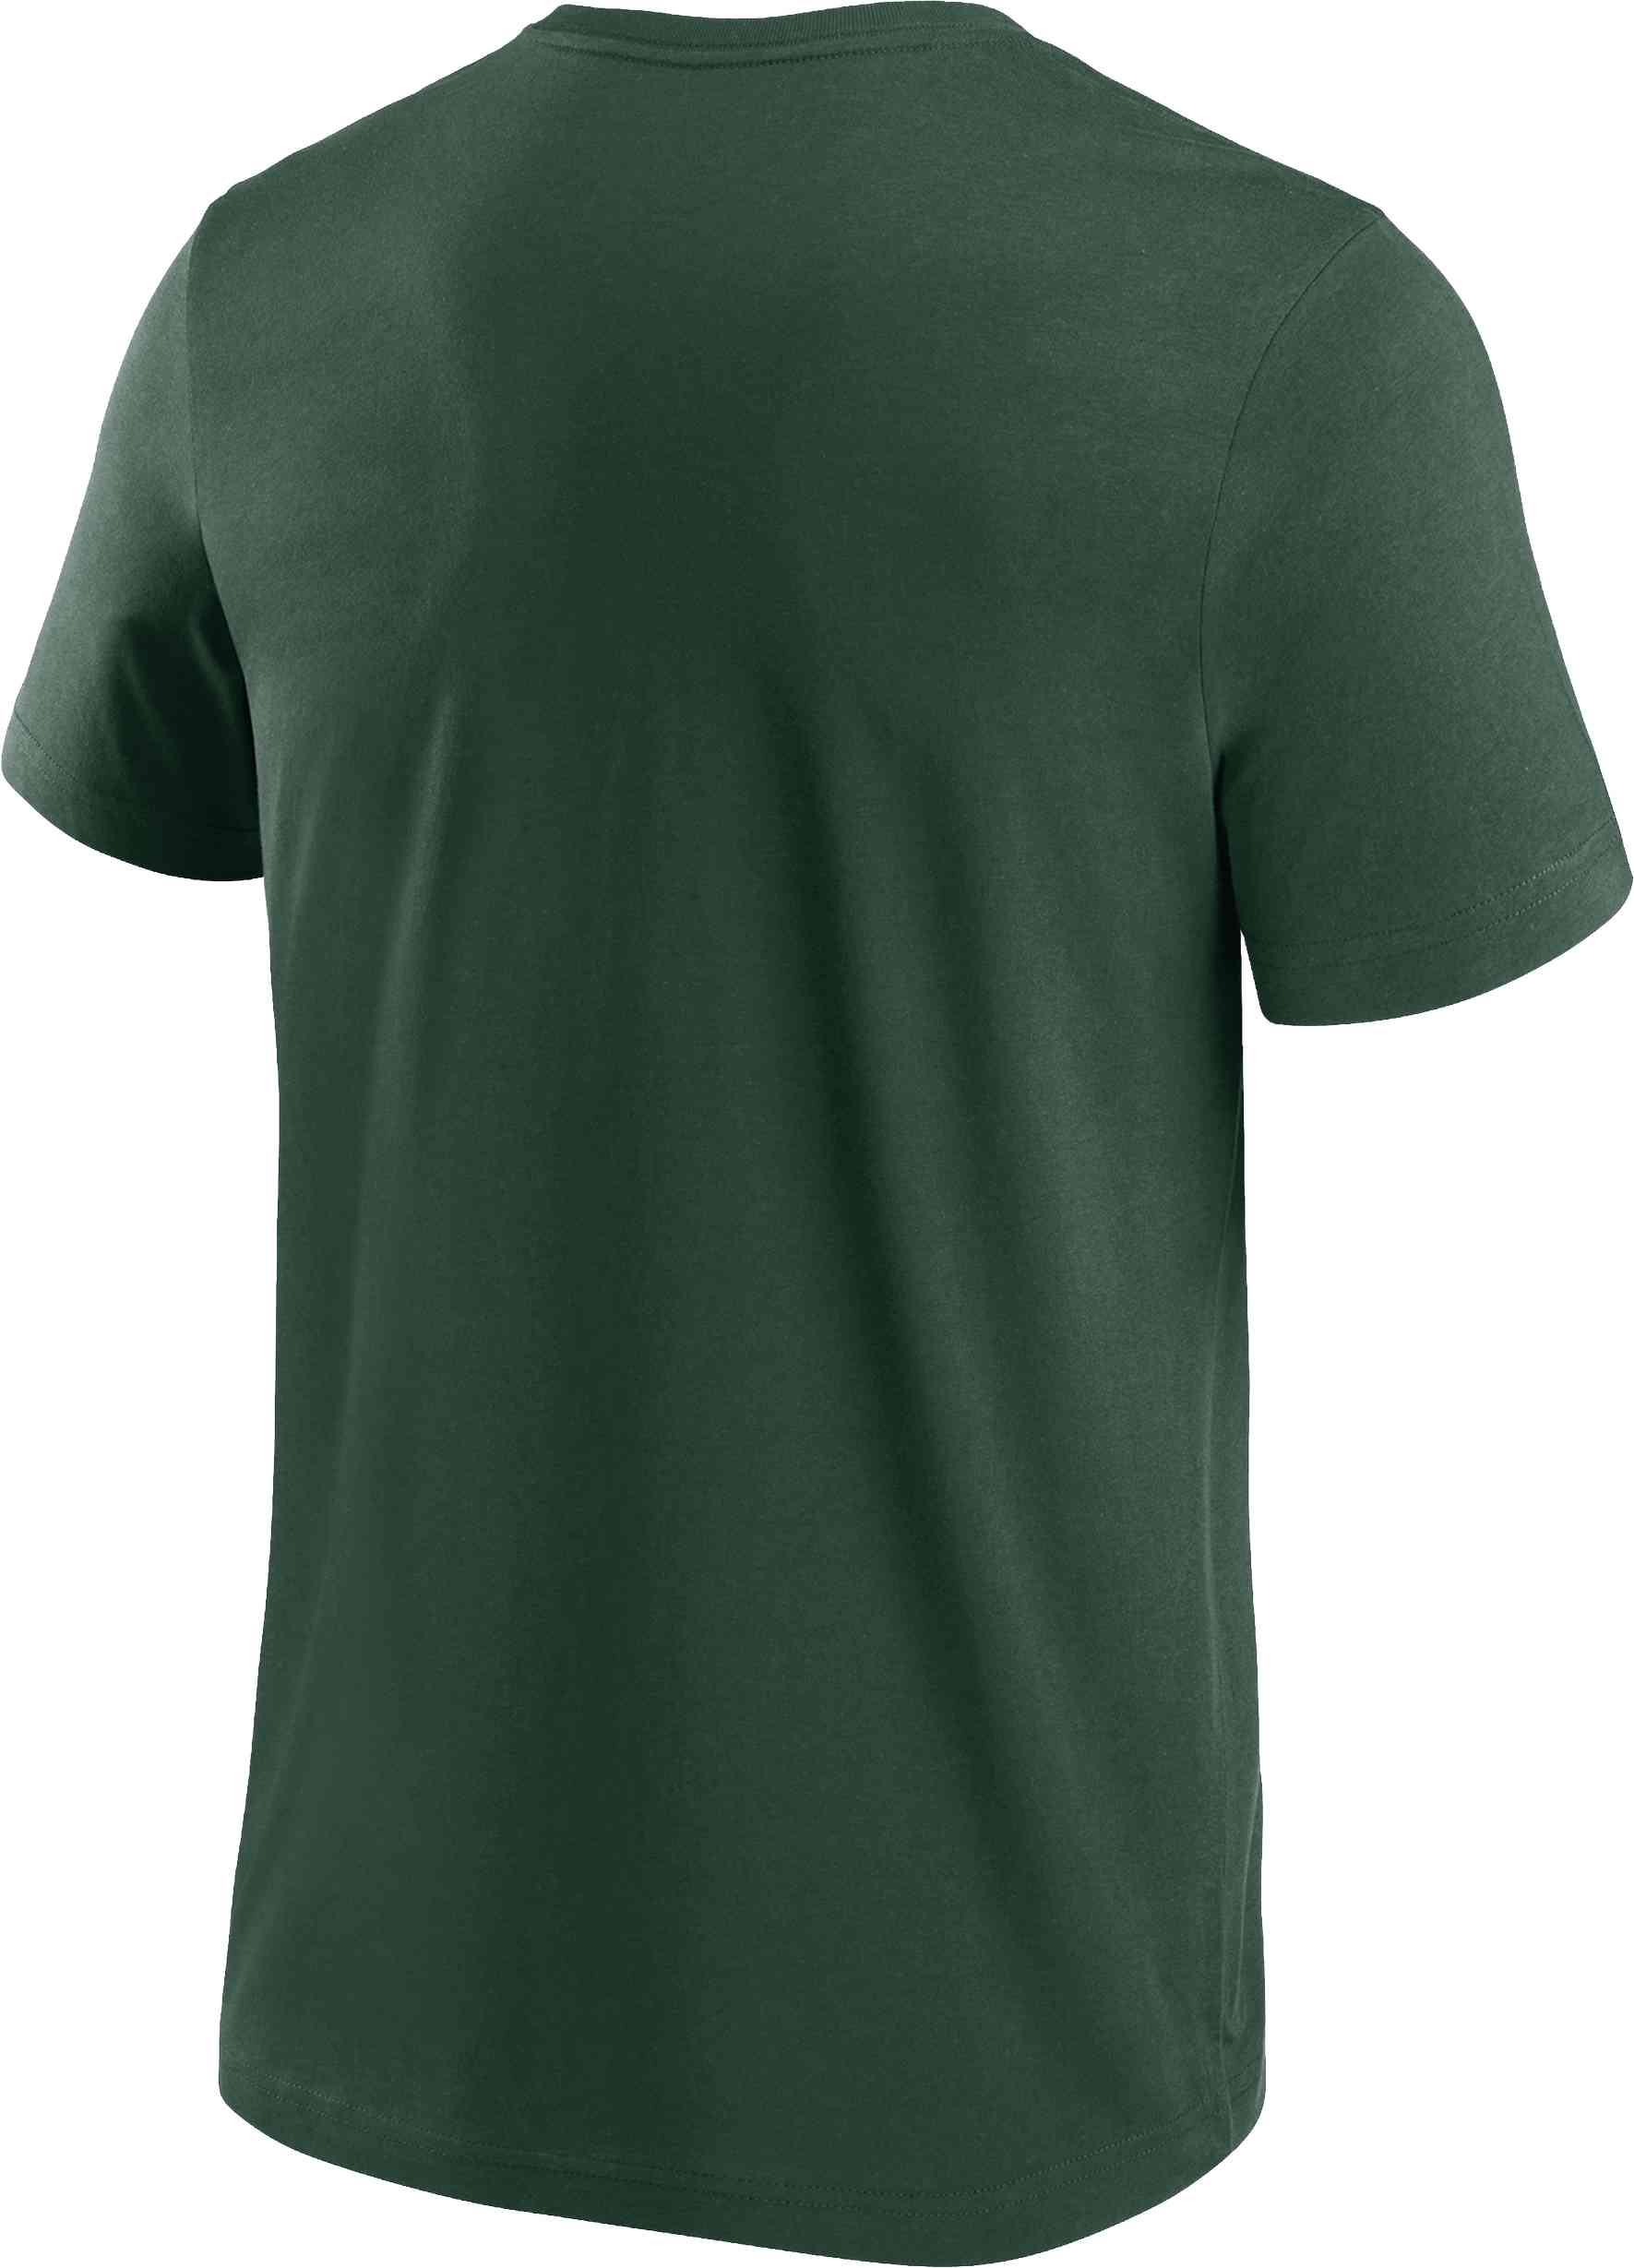 Fanatics - NFL New York Jets Primary Logo Graphic T-Shirt